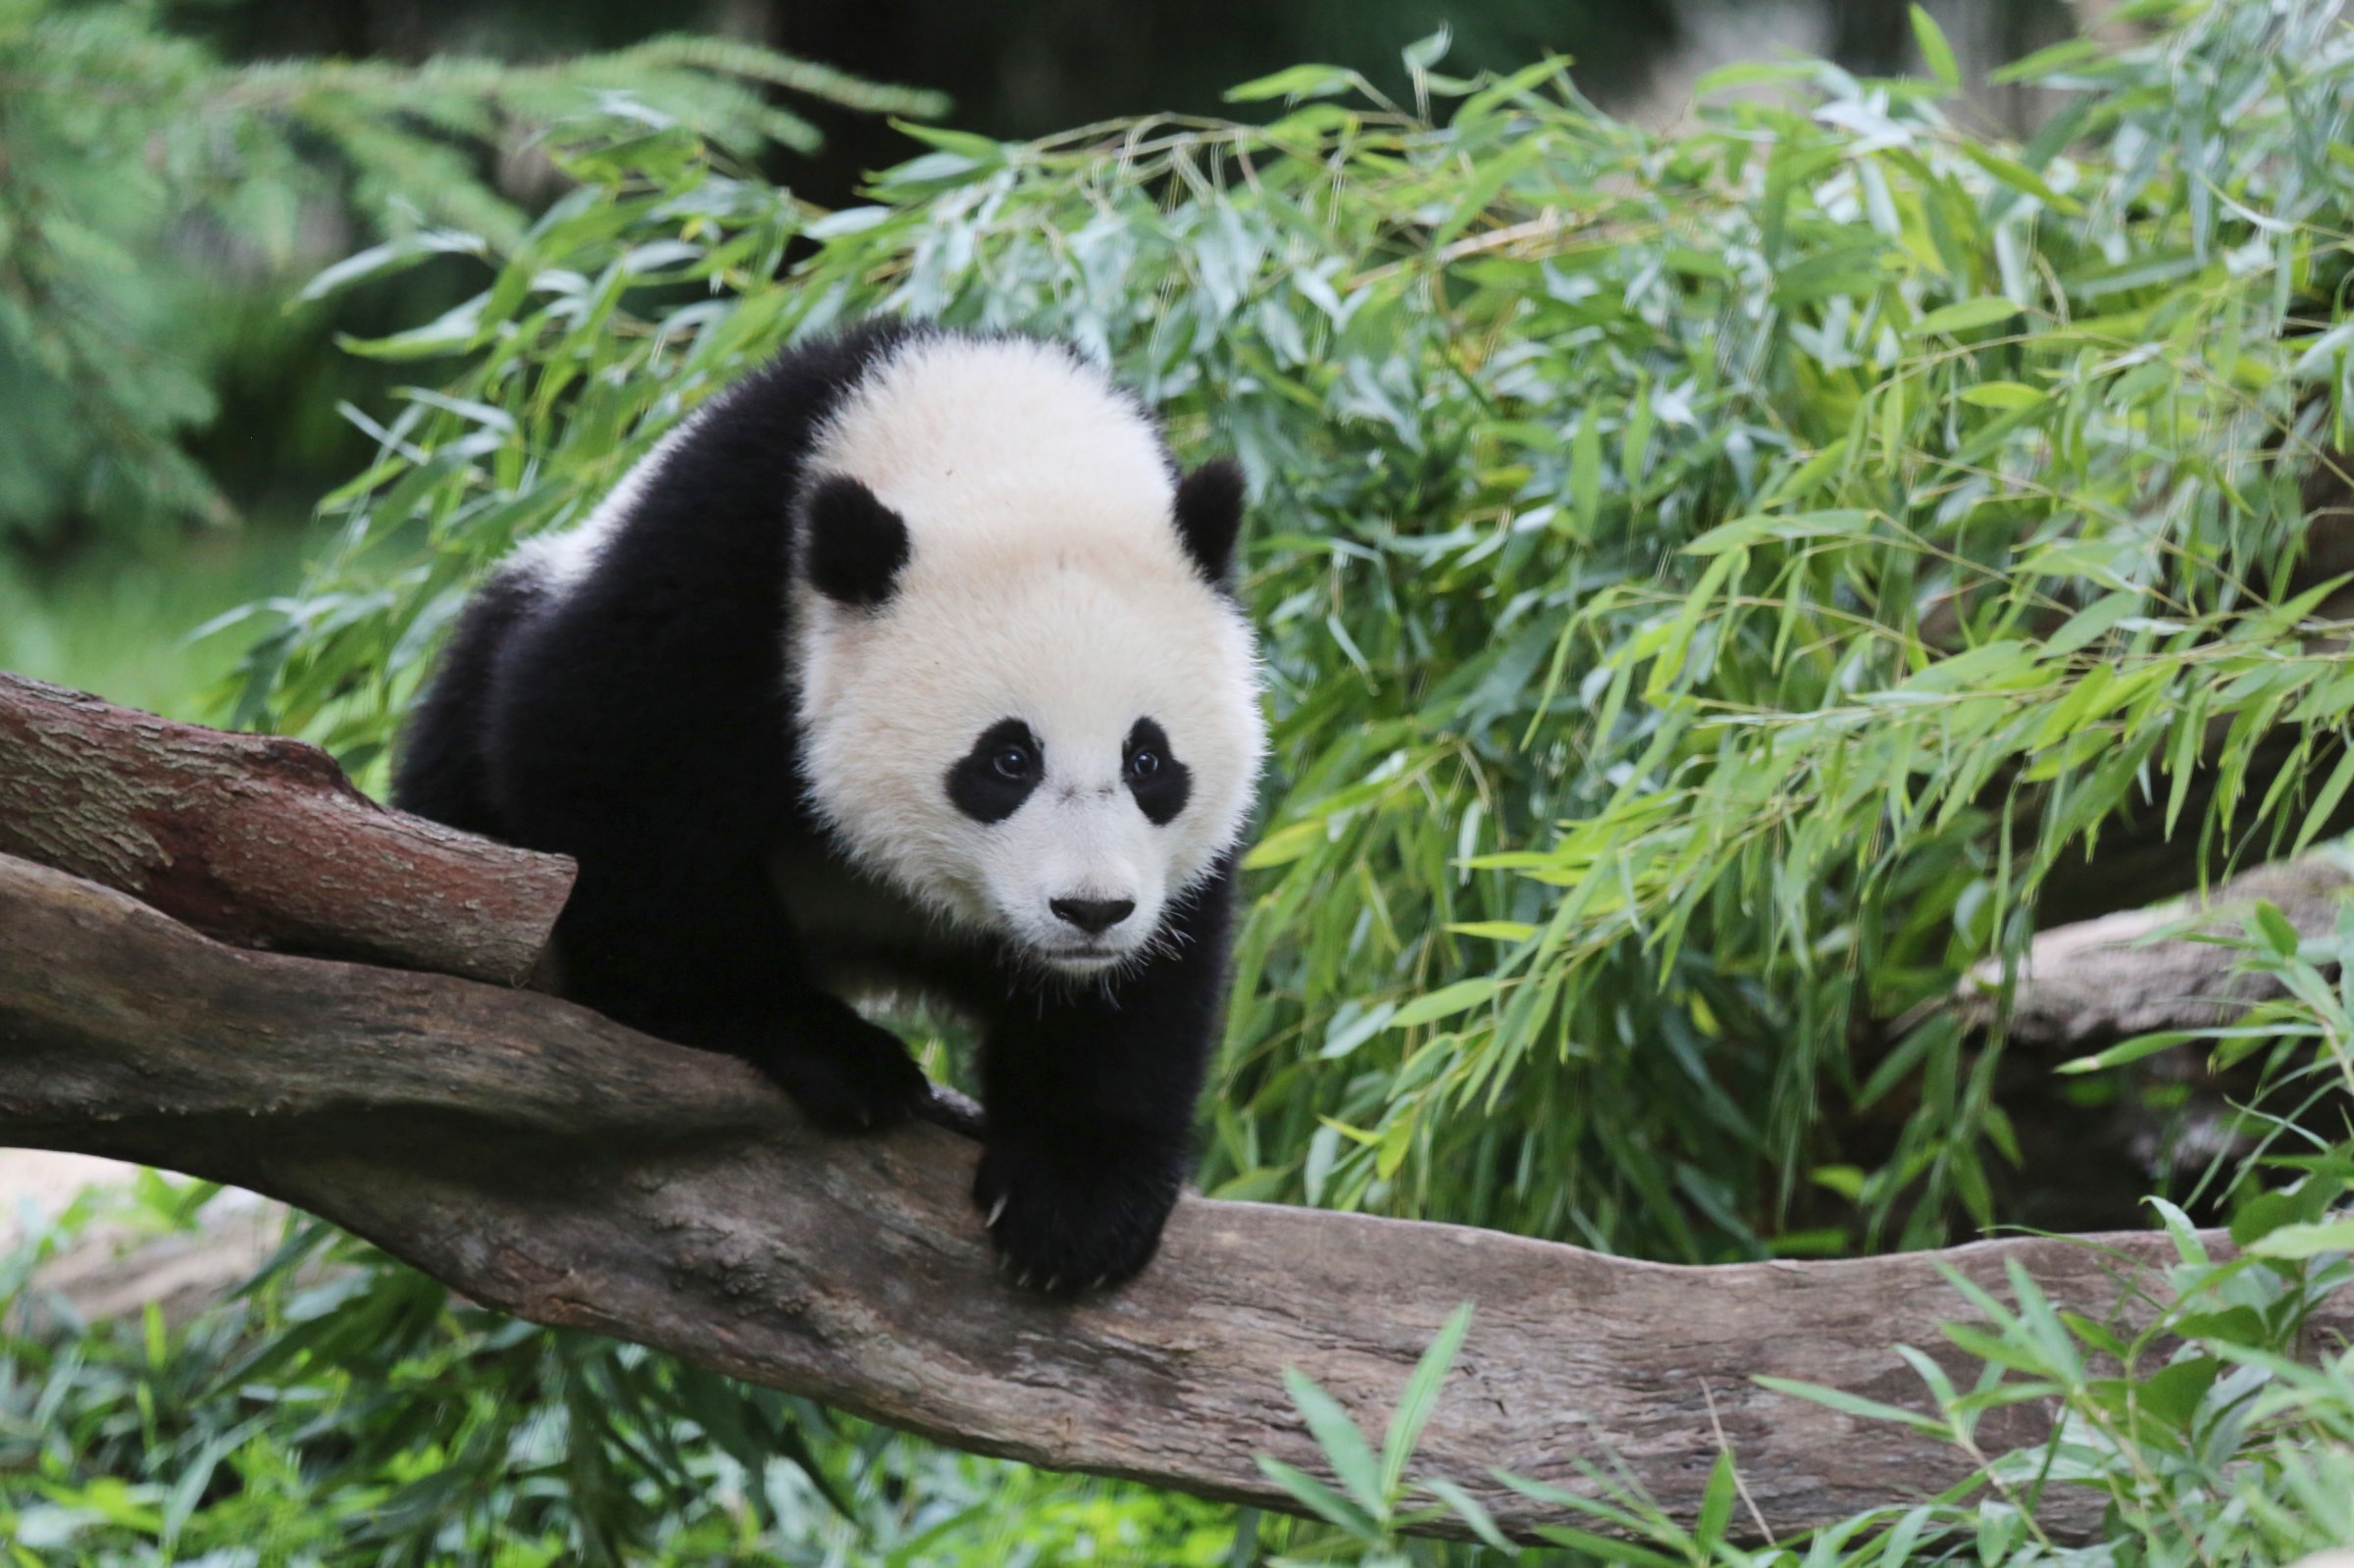 Bao Bao is seen in the panda exhibit at the Smithsonian's National Zoo in Washington